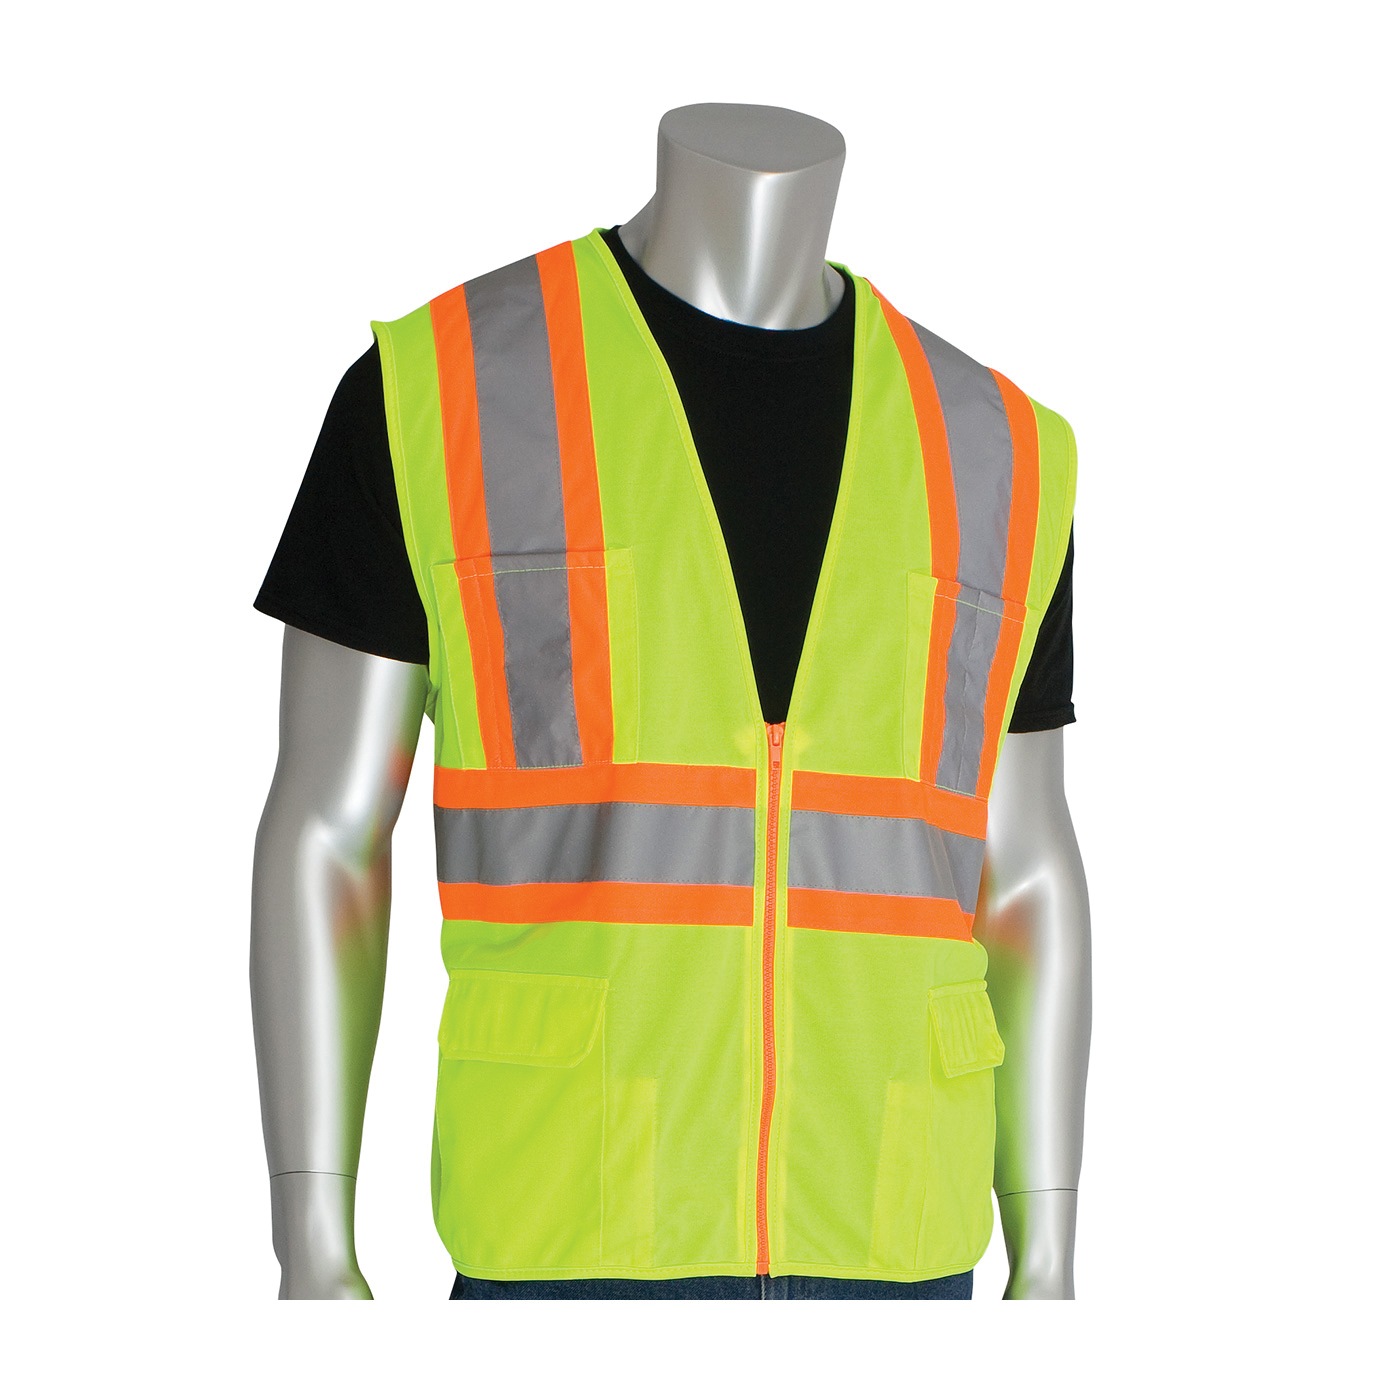 PIP® 302-MAPLY-L 2-Tone Premium Surveyor Safety Vest, L, Hi-Viz Lime Yellow, Polyester, Zipper Closure, 11 Pockets, ANSI Class: Class 2, Specifications Met: ANSI 107 Type R